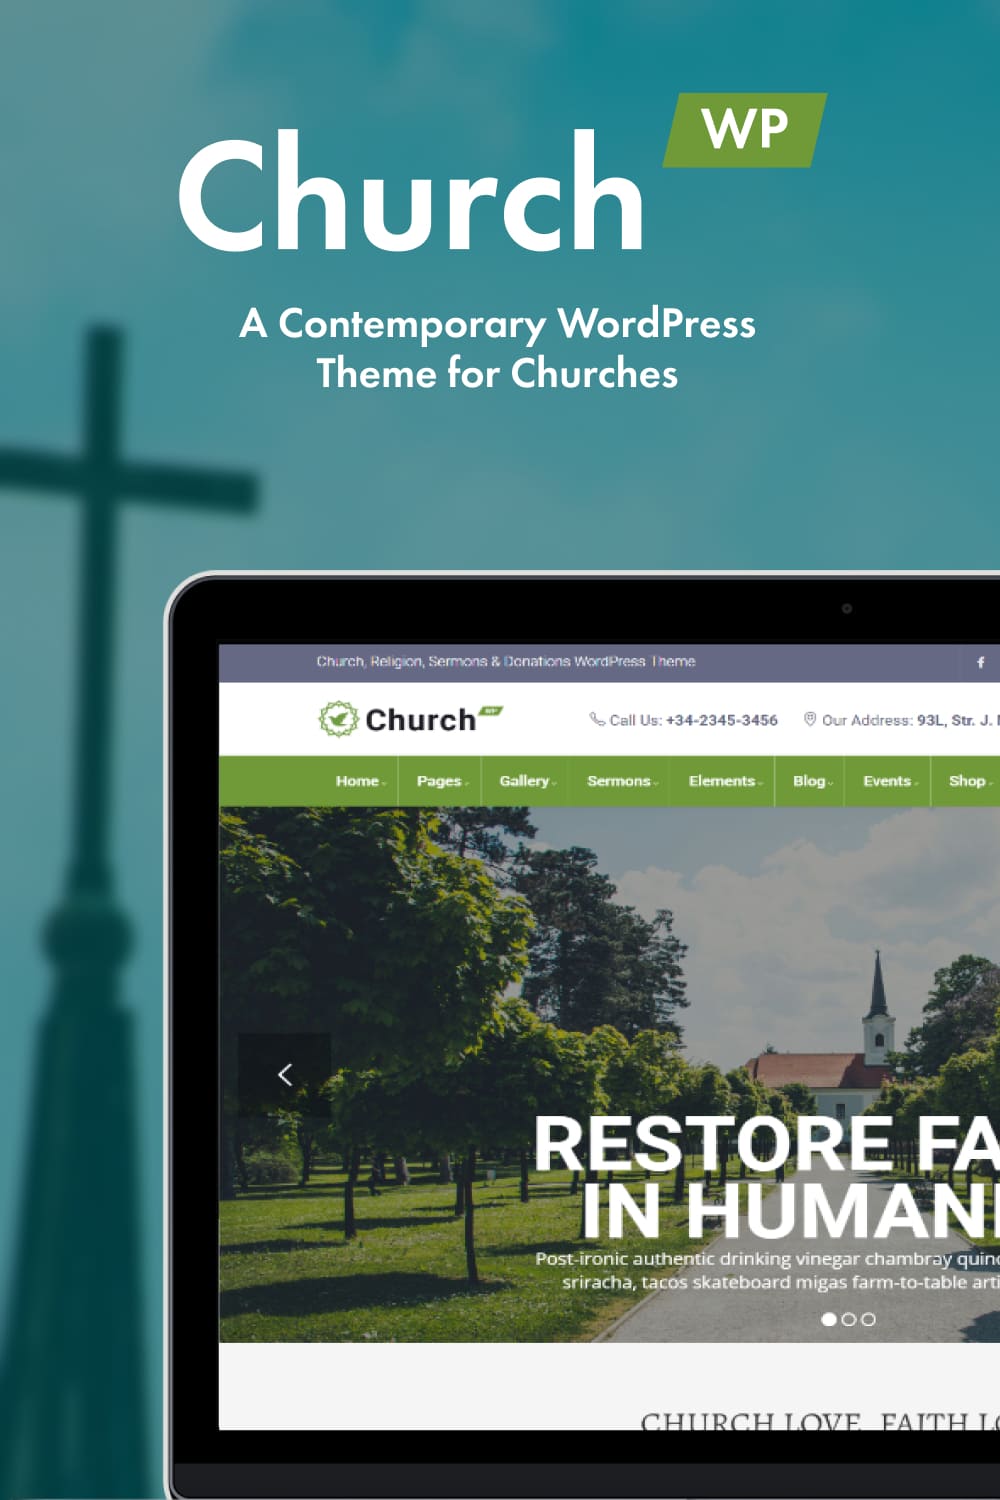 Churchwp a contemporary wordpress theme for churches.